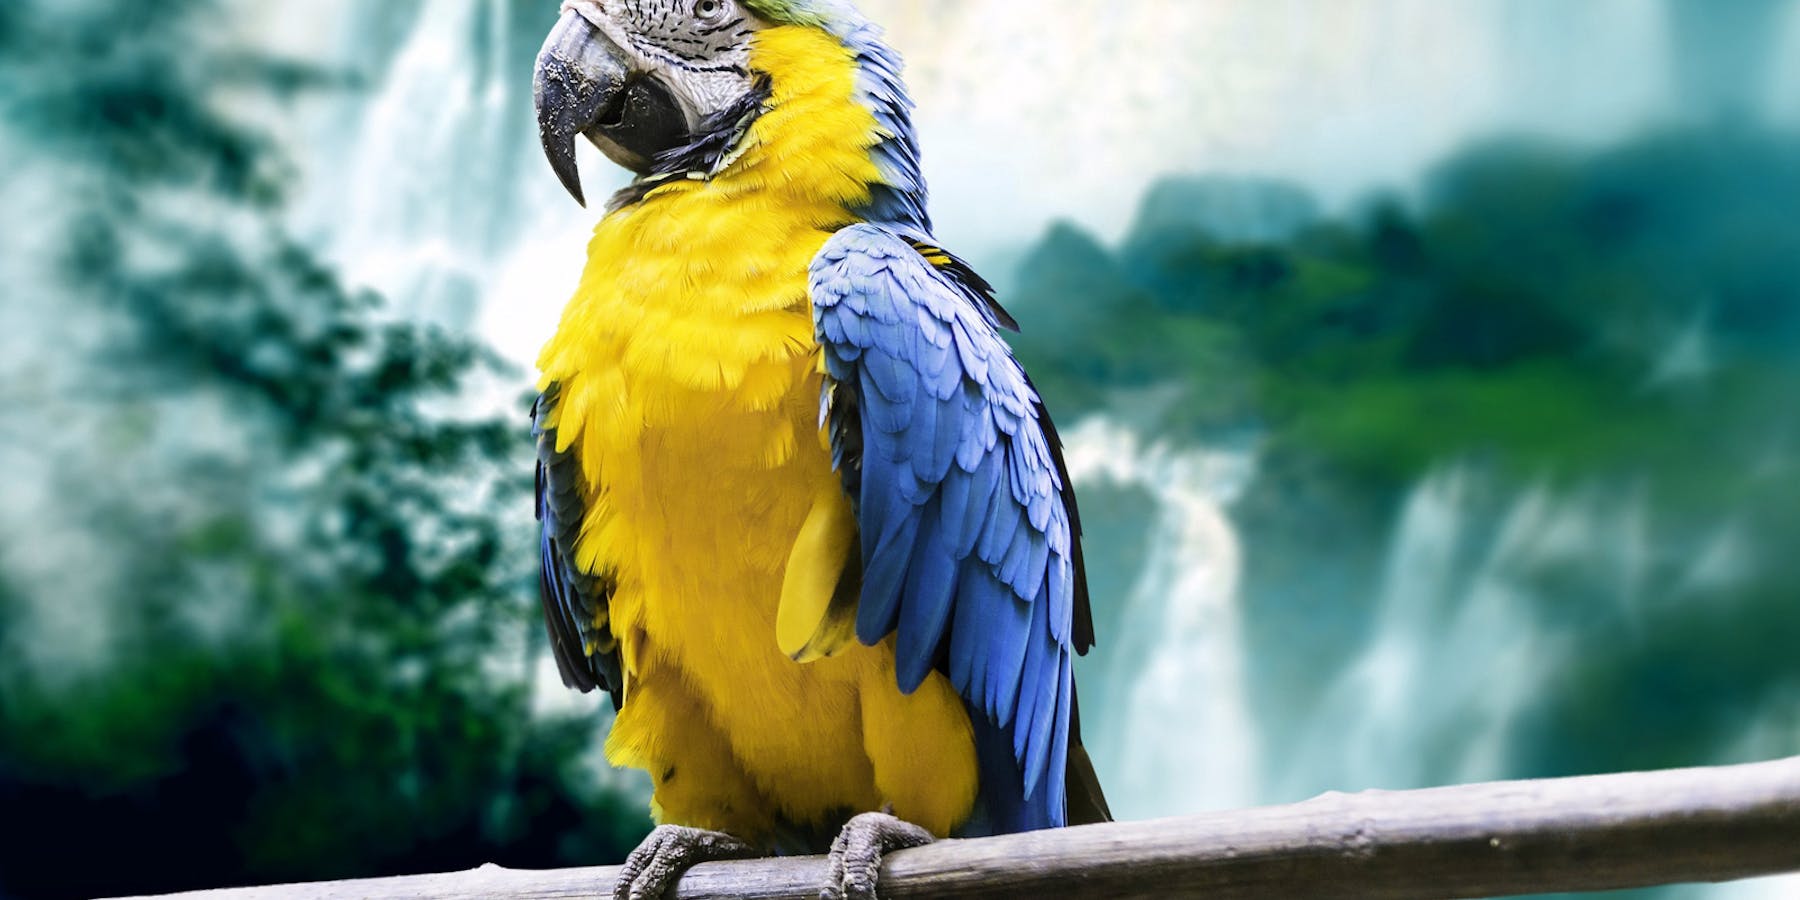 Macaw in Brazil